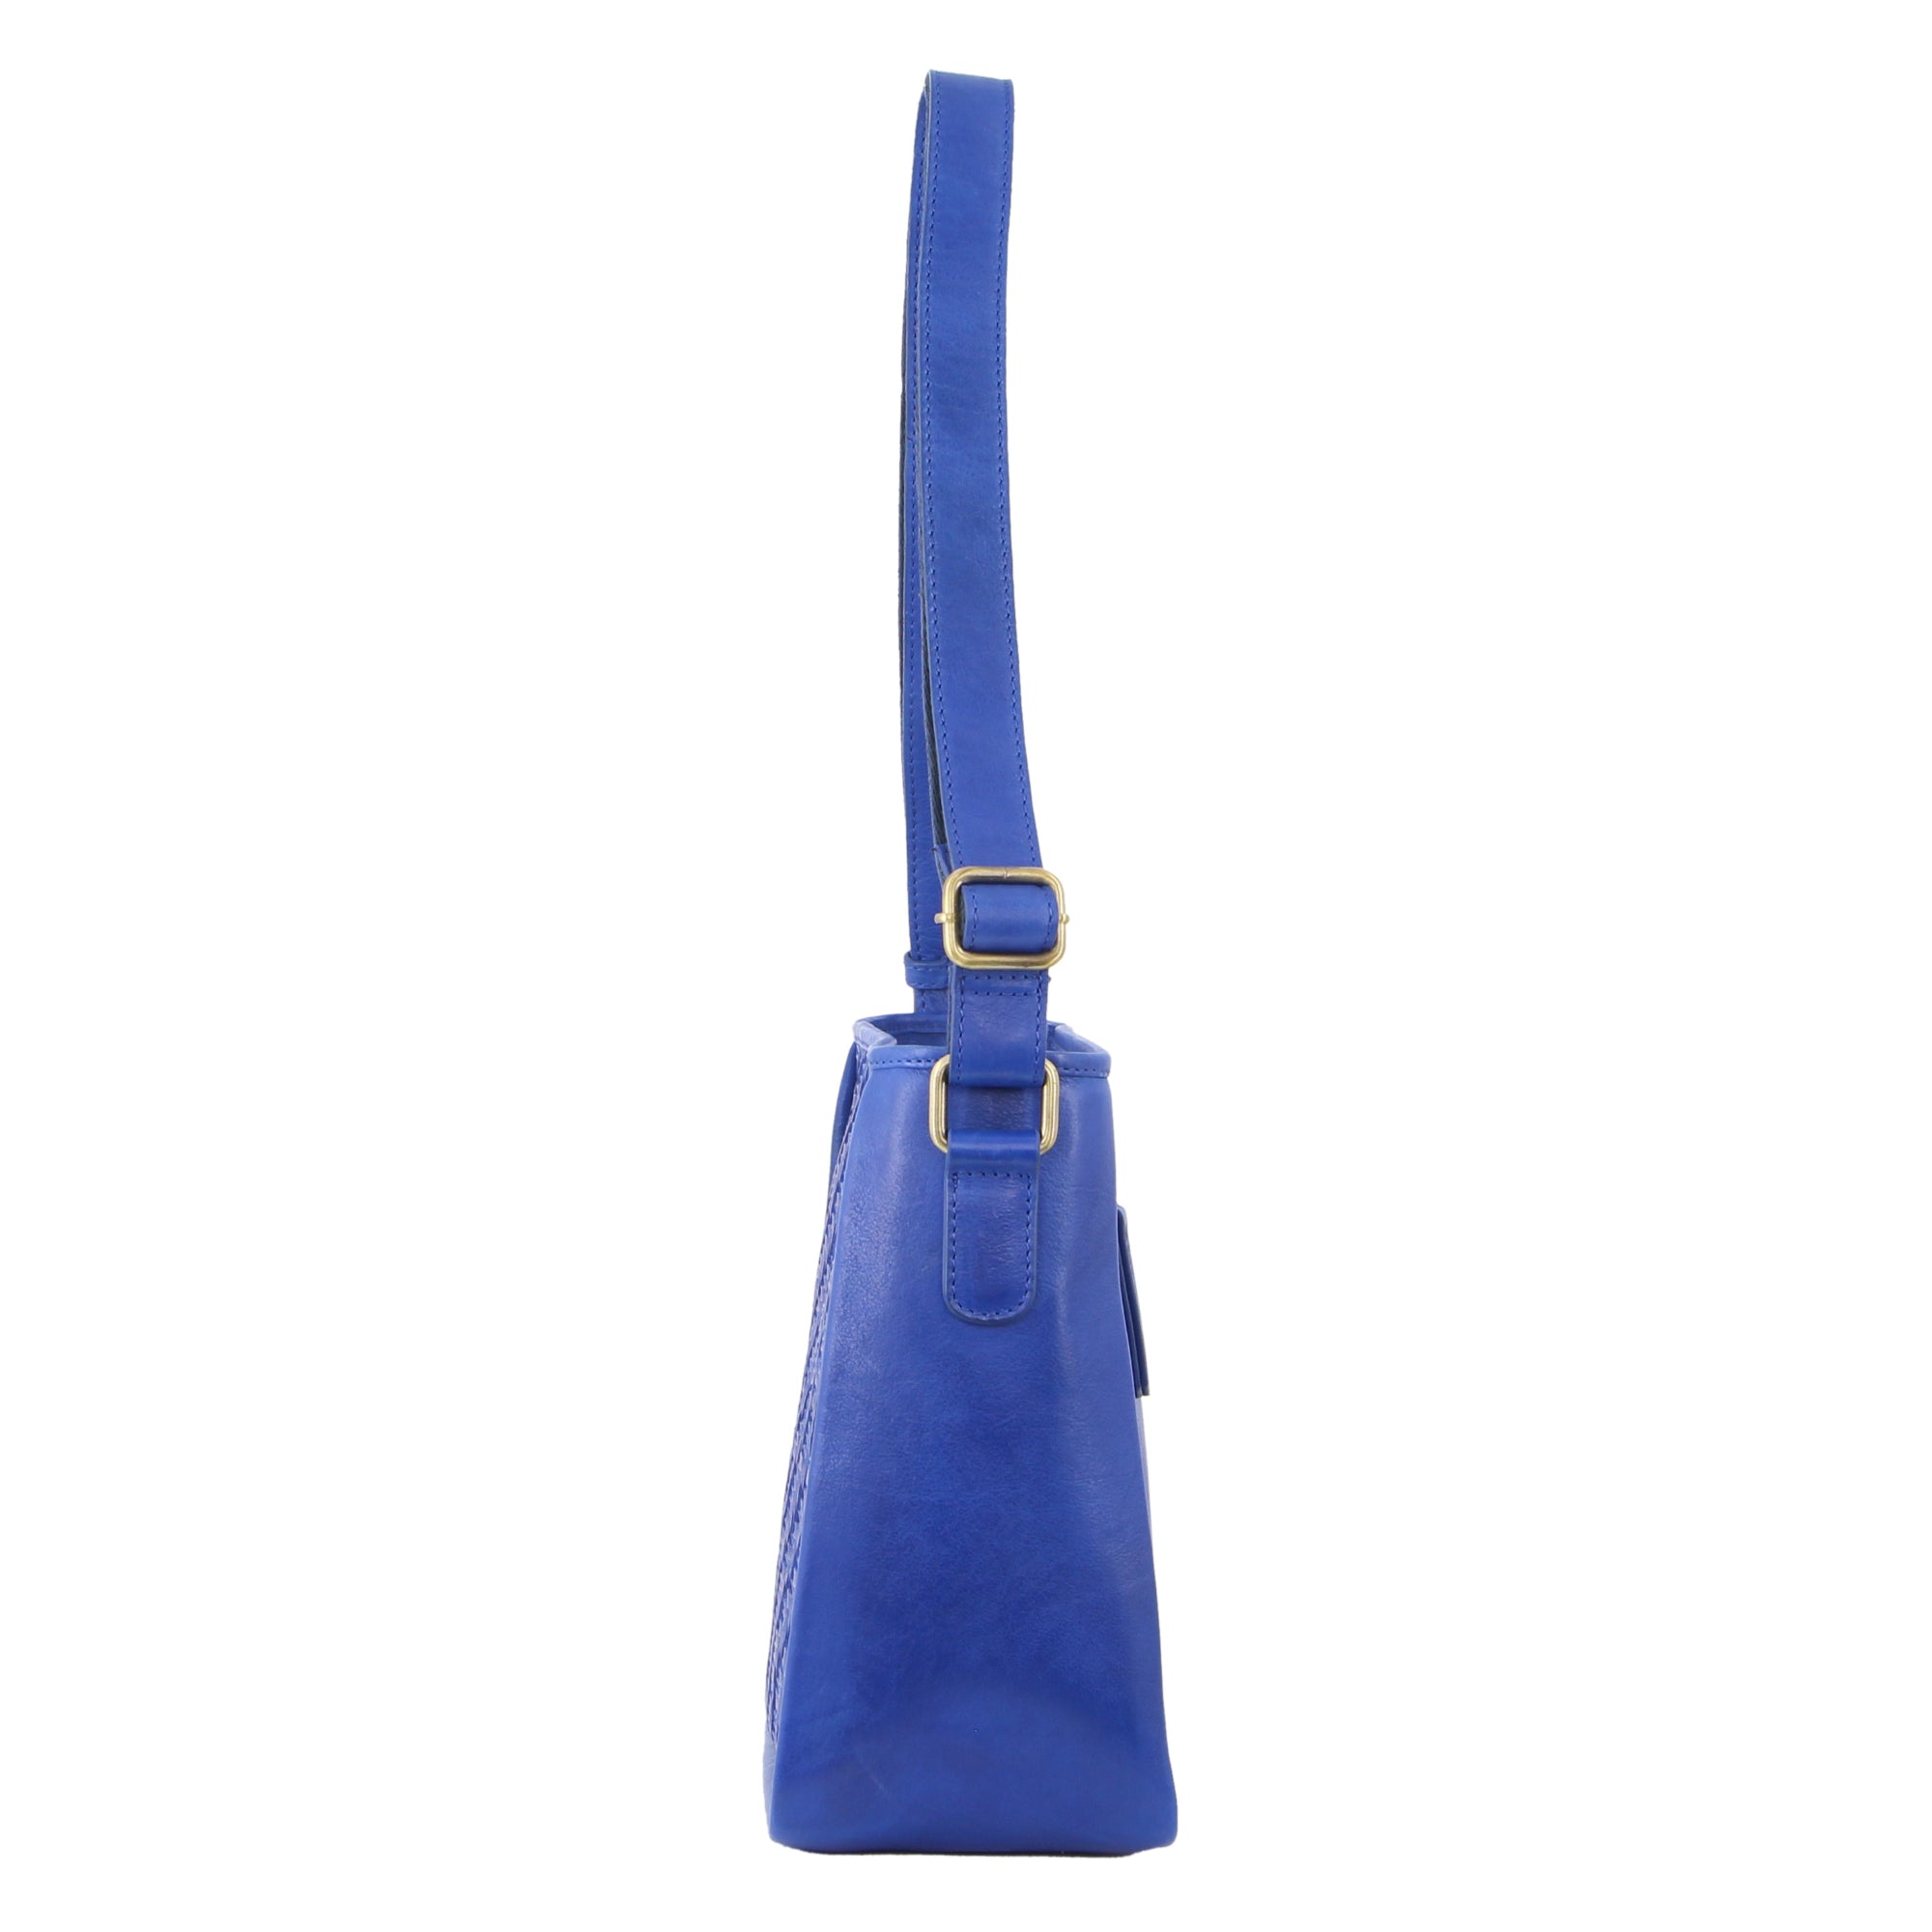 Pierre Cardin Woven Embossed Leather Cross-Body Bag in Royal Blue